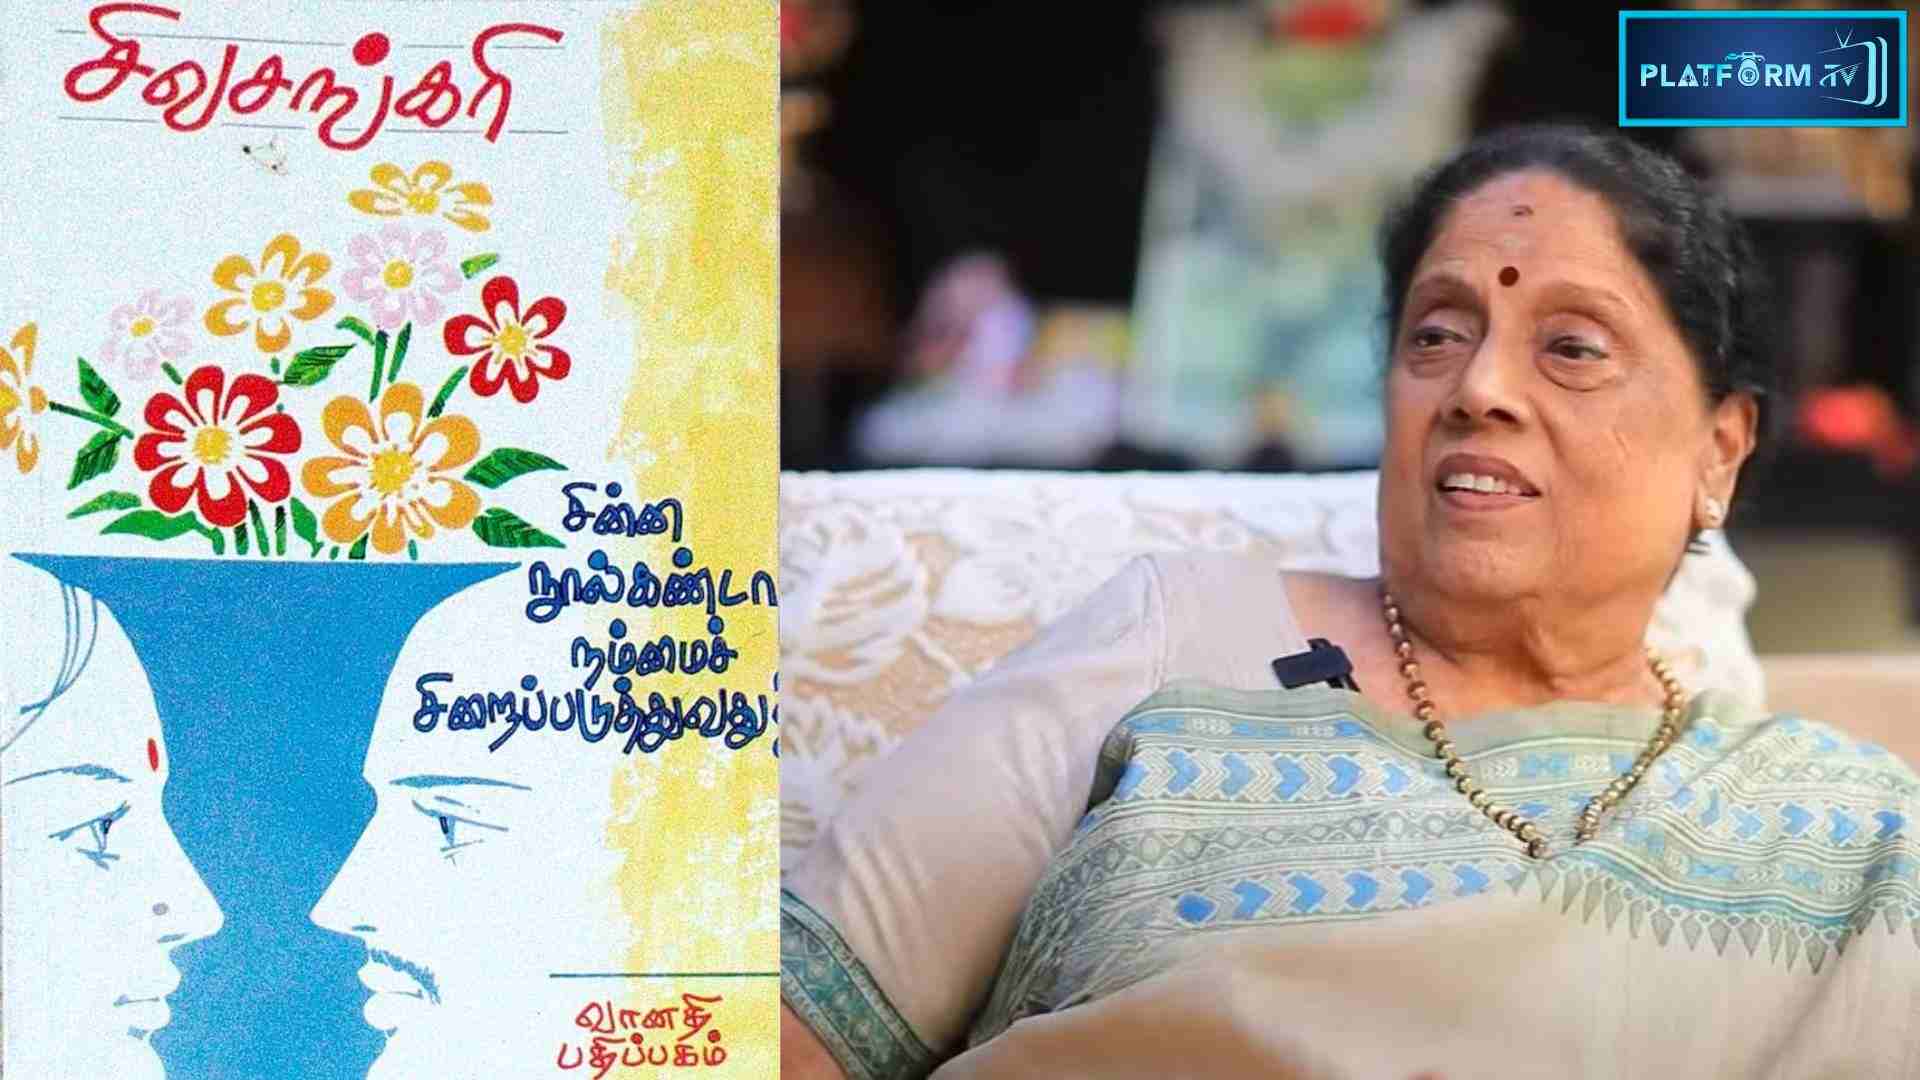 Chinna Noolkanda Nammai Siraipaduthuvathu - Platform Tamil